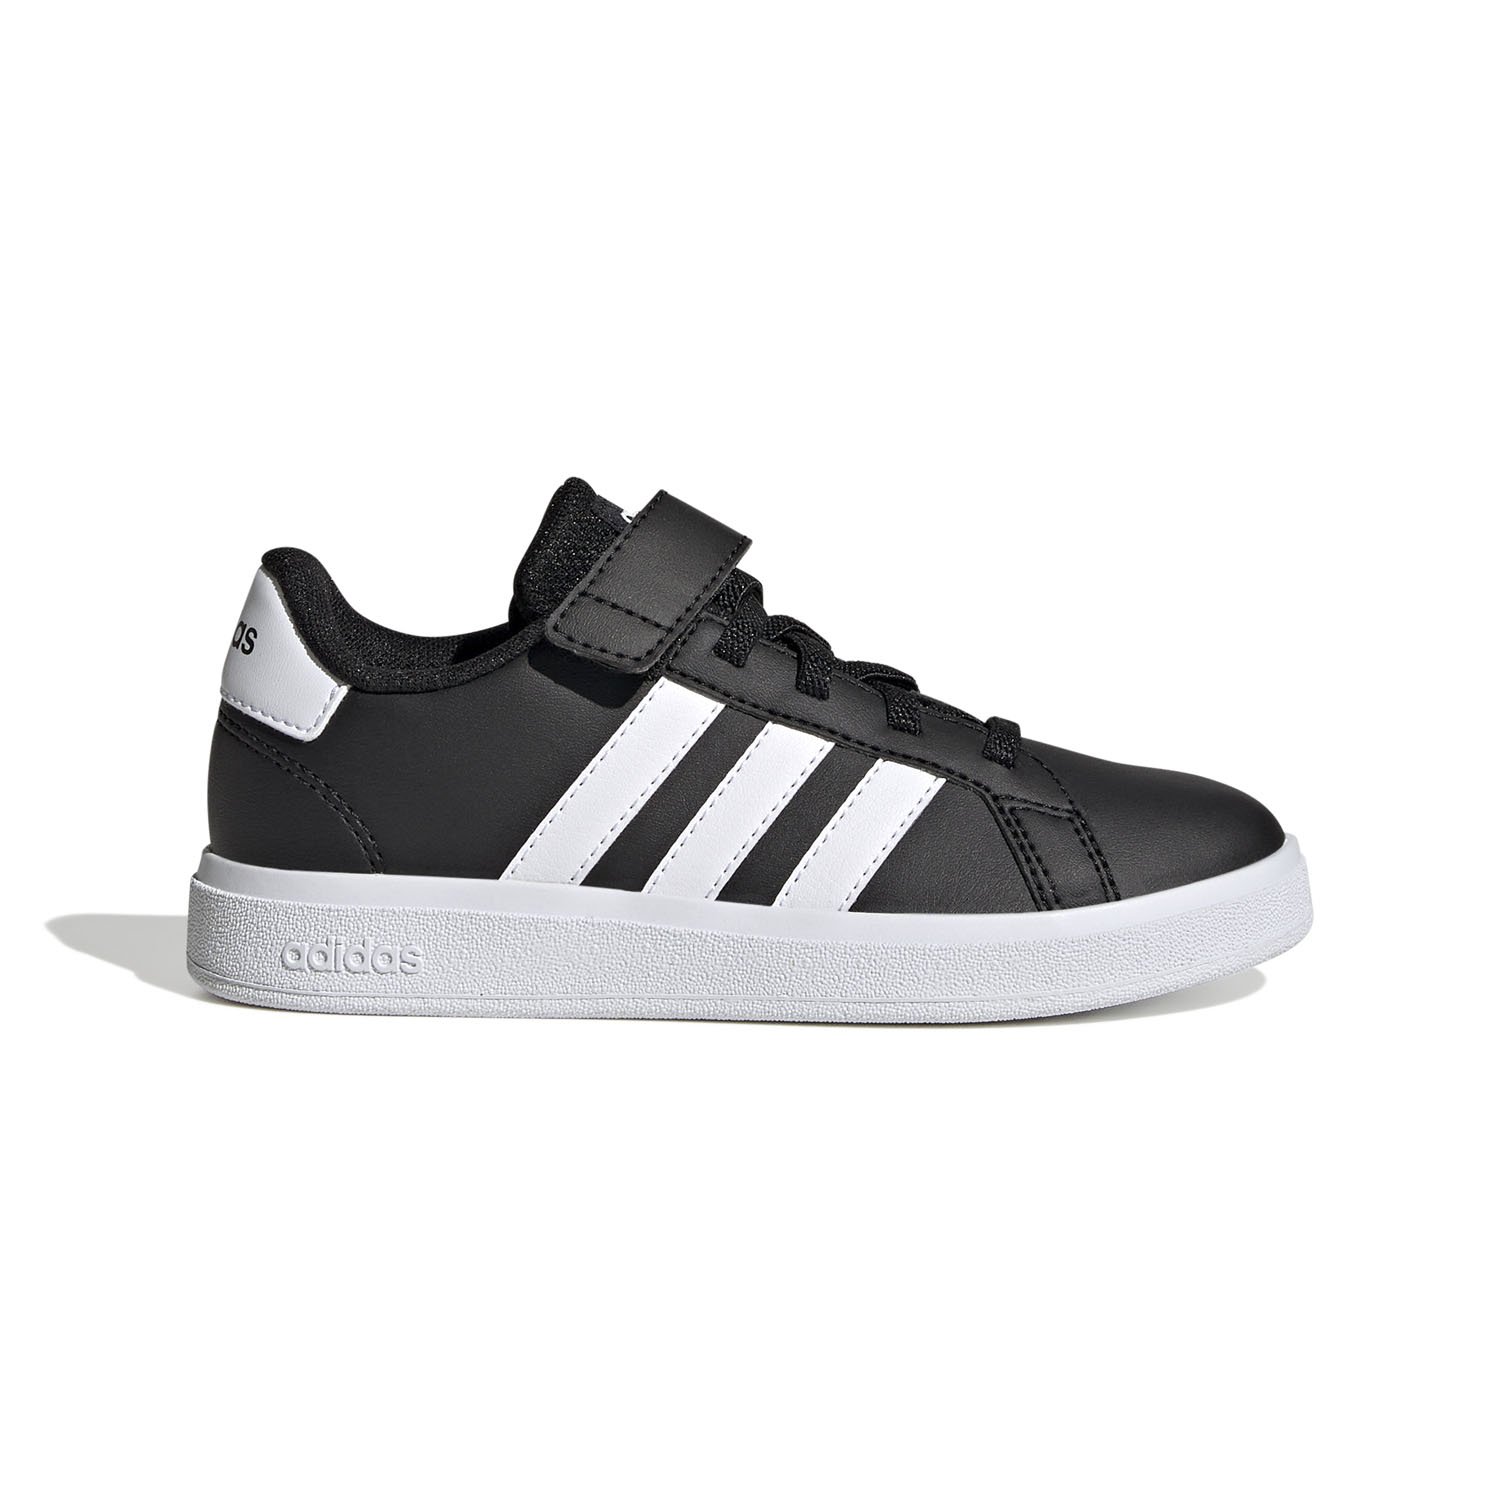 Adidas Grand Court 2.0 Çocuk Spor Ayakkabısı - Siyah - 1